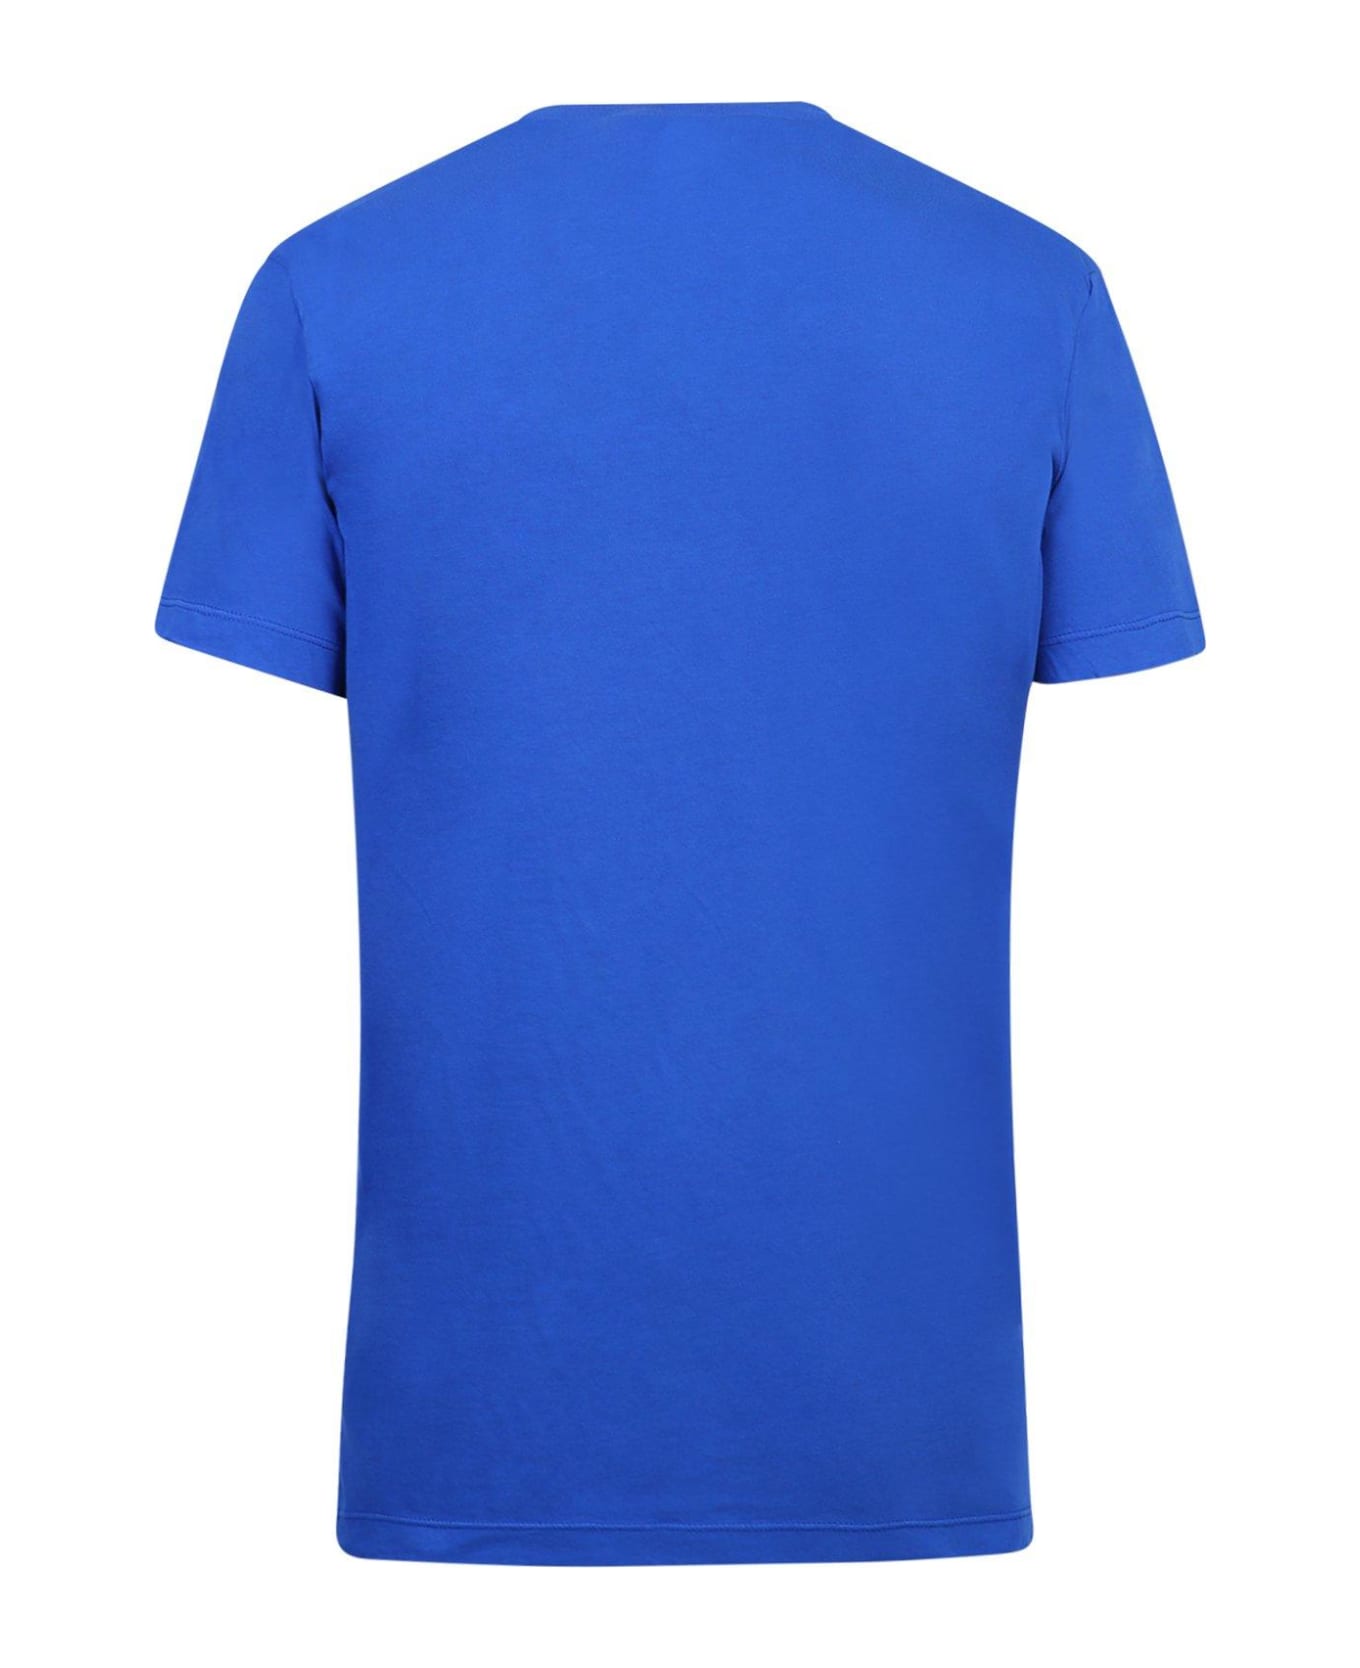 Dsquared2 Logo Printed Crewneck T-shirt - Blue シャツ